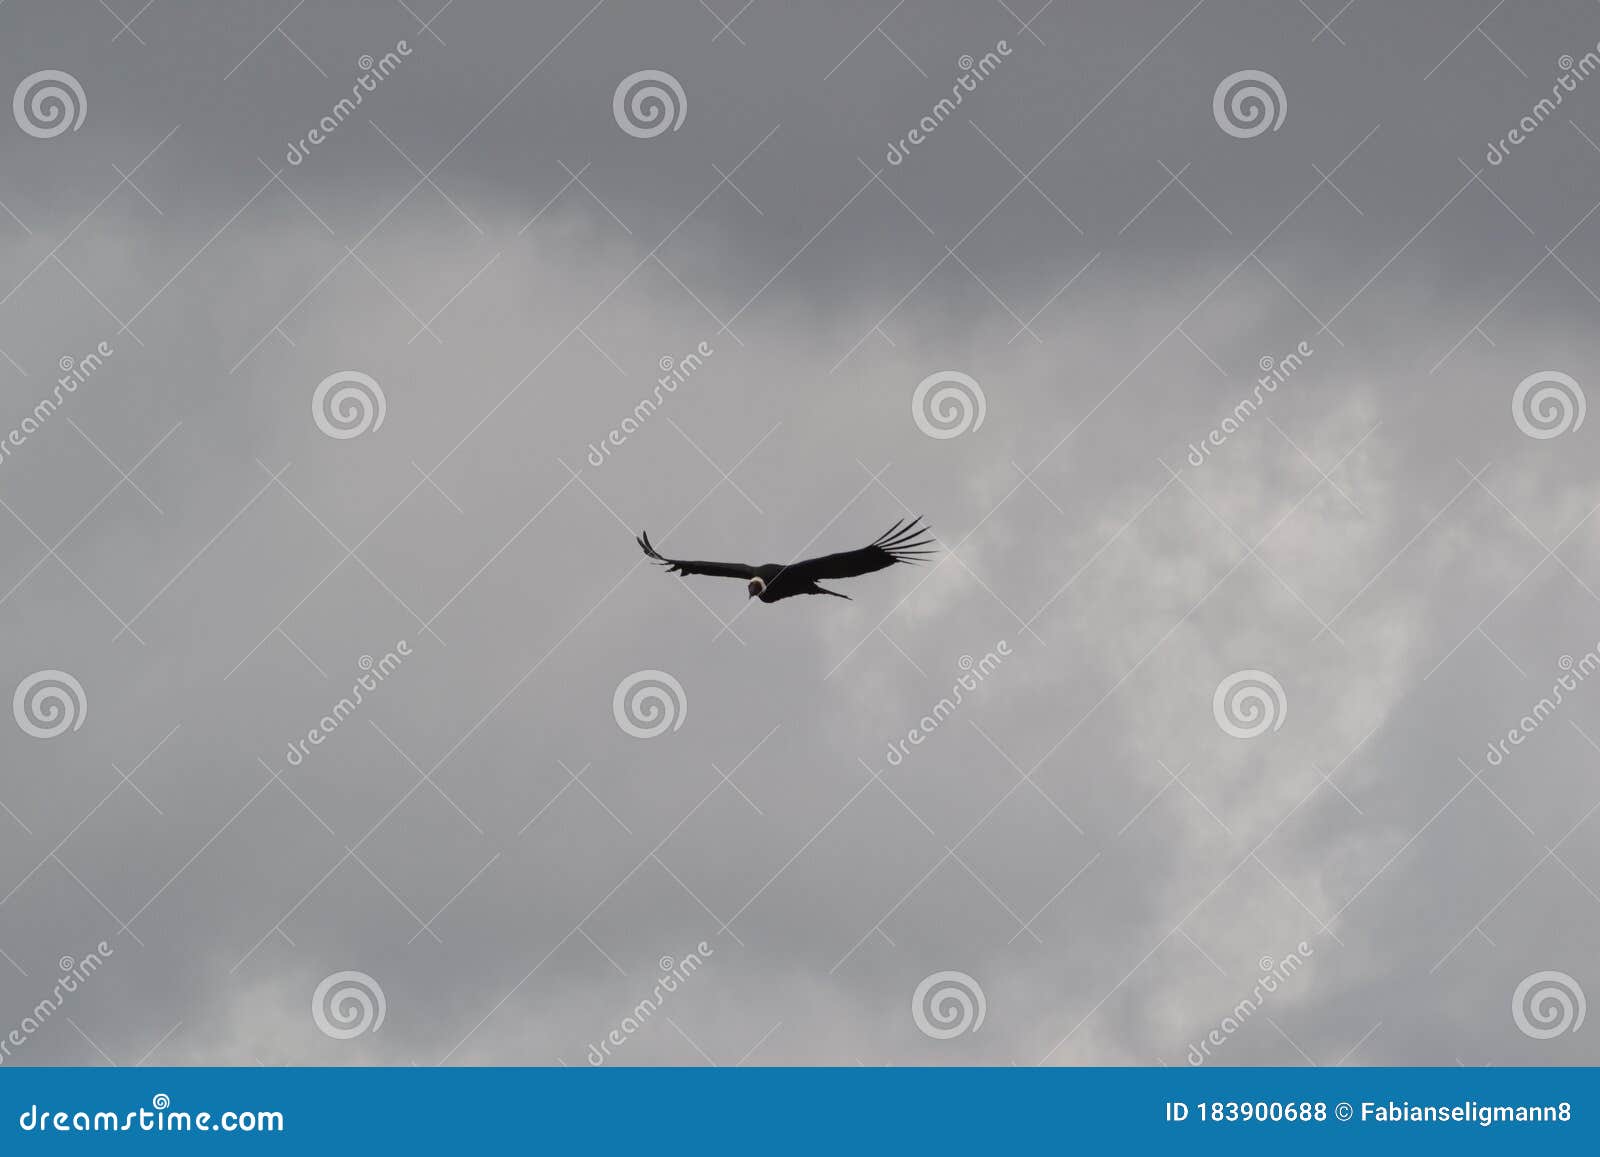 majesty flight of a condor andino